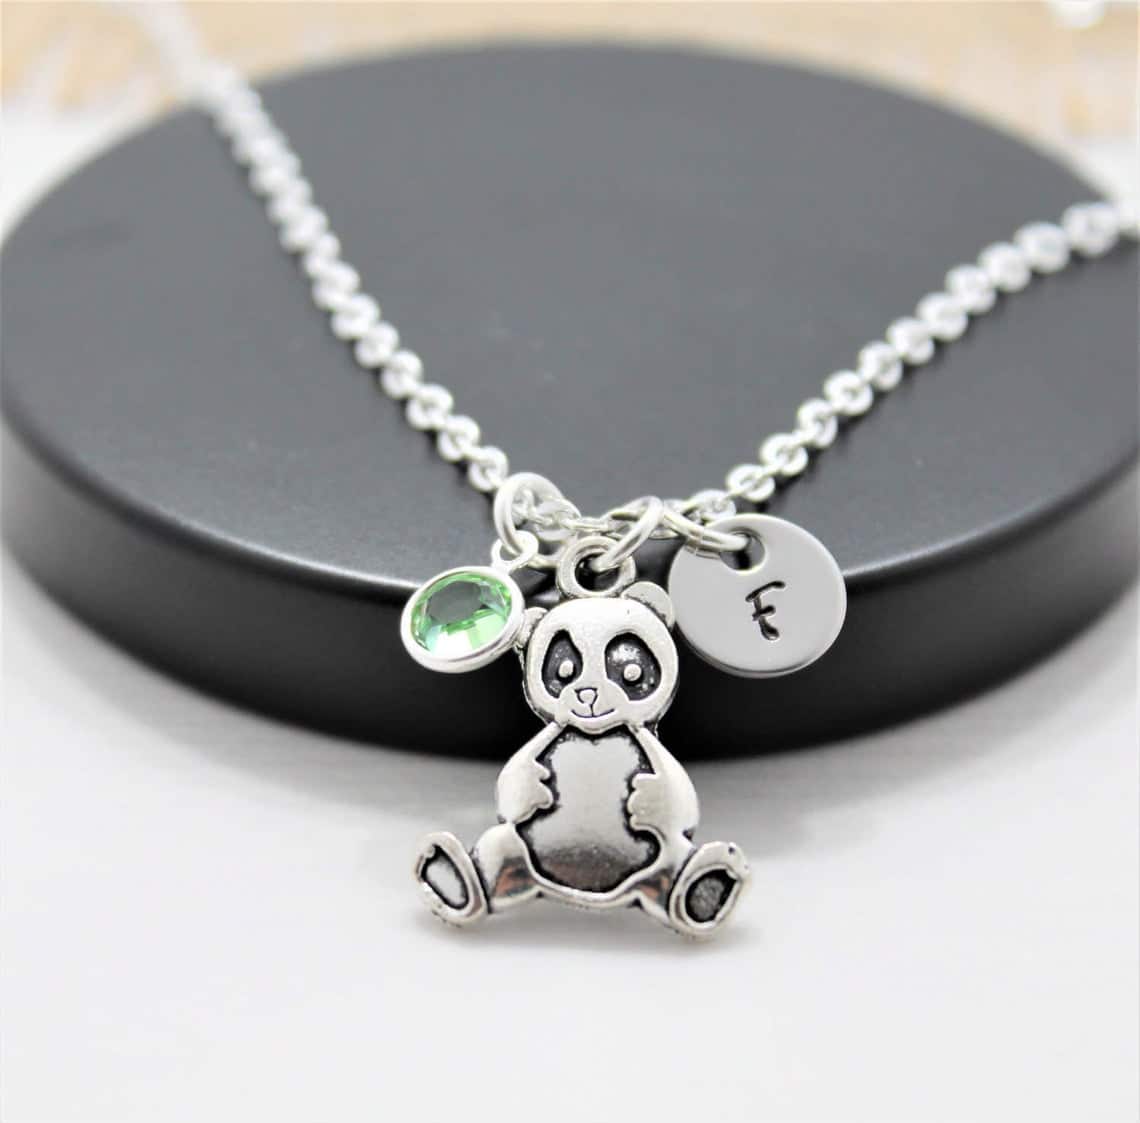 Personalized Panda Necklace